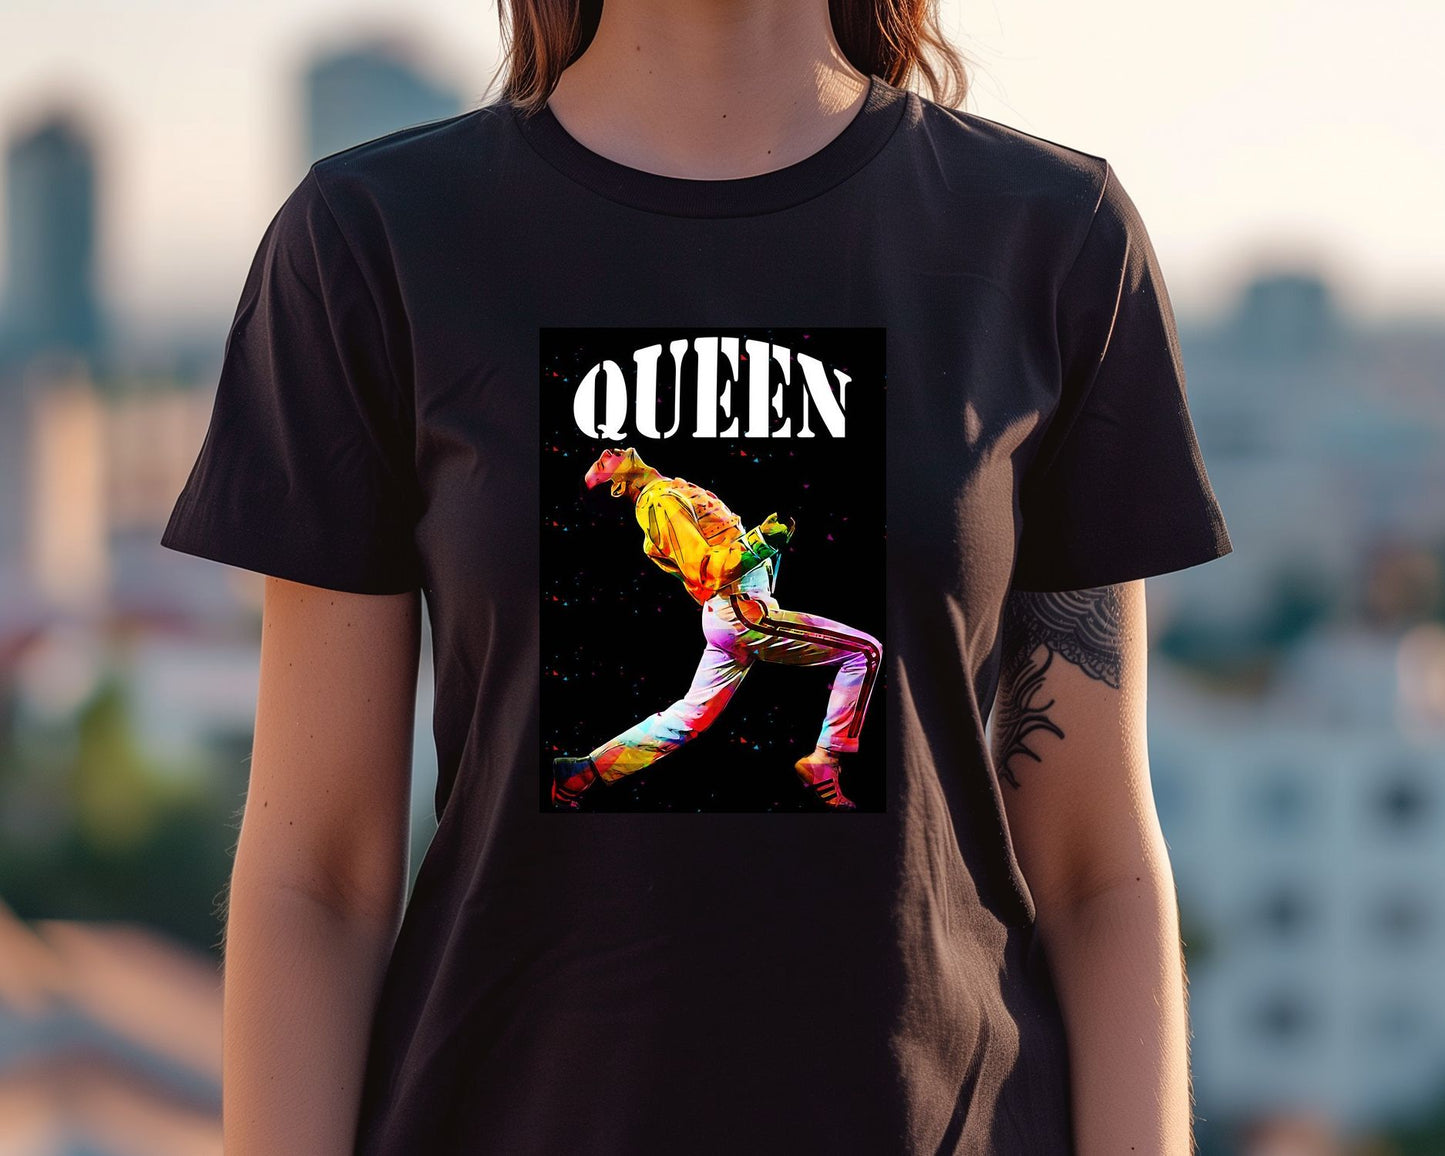 Freddie Mercury - @ColorfulArt